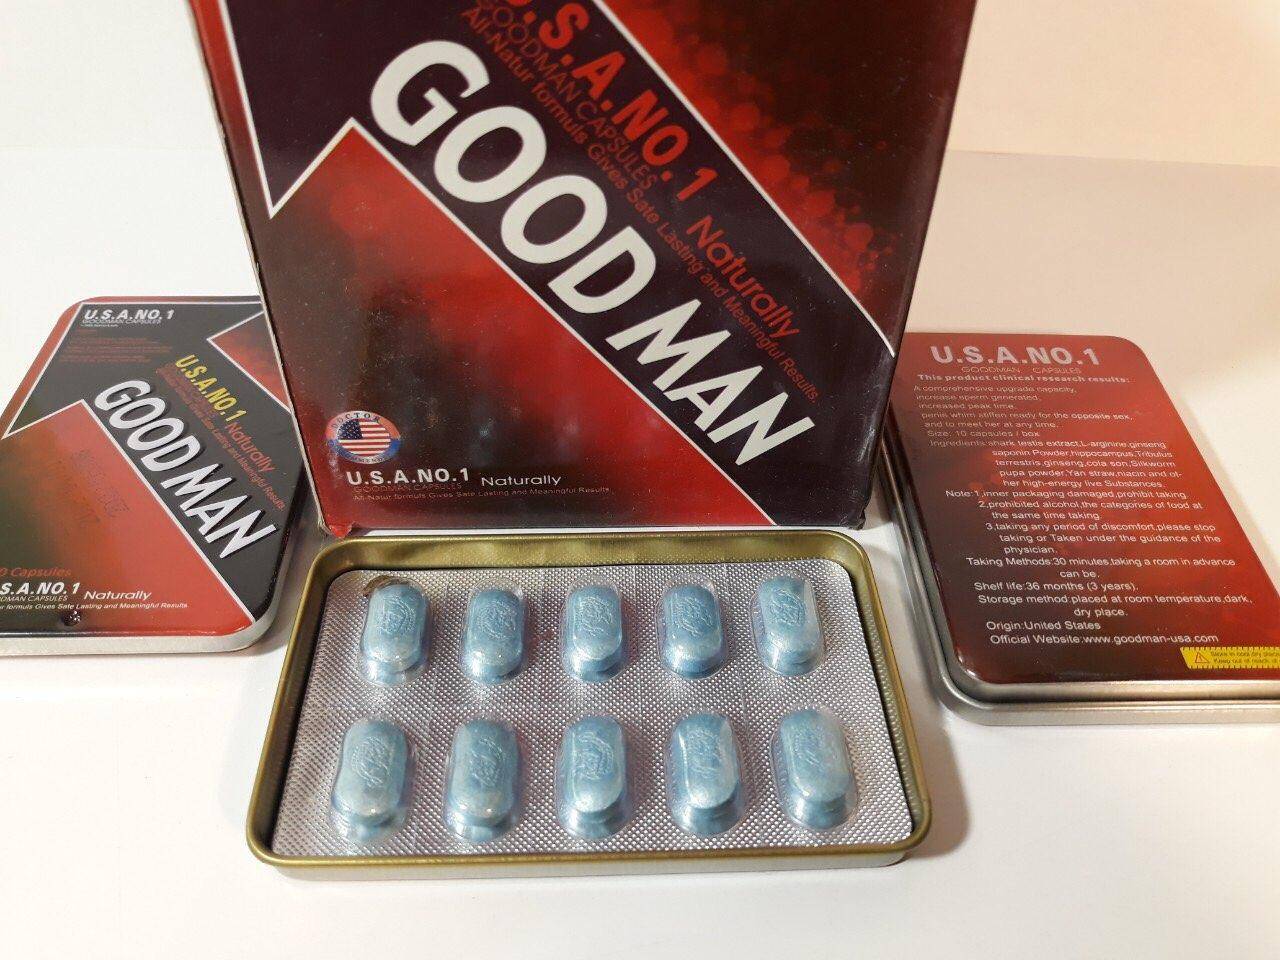 Таблетки для повышения потенции цены. Goodman таблетки для мужчин. Лекарство для потенции. Препараты для мужской потенции. Таблетки для мужской эрекции.